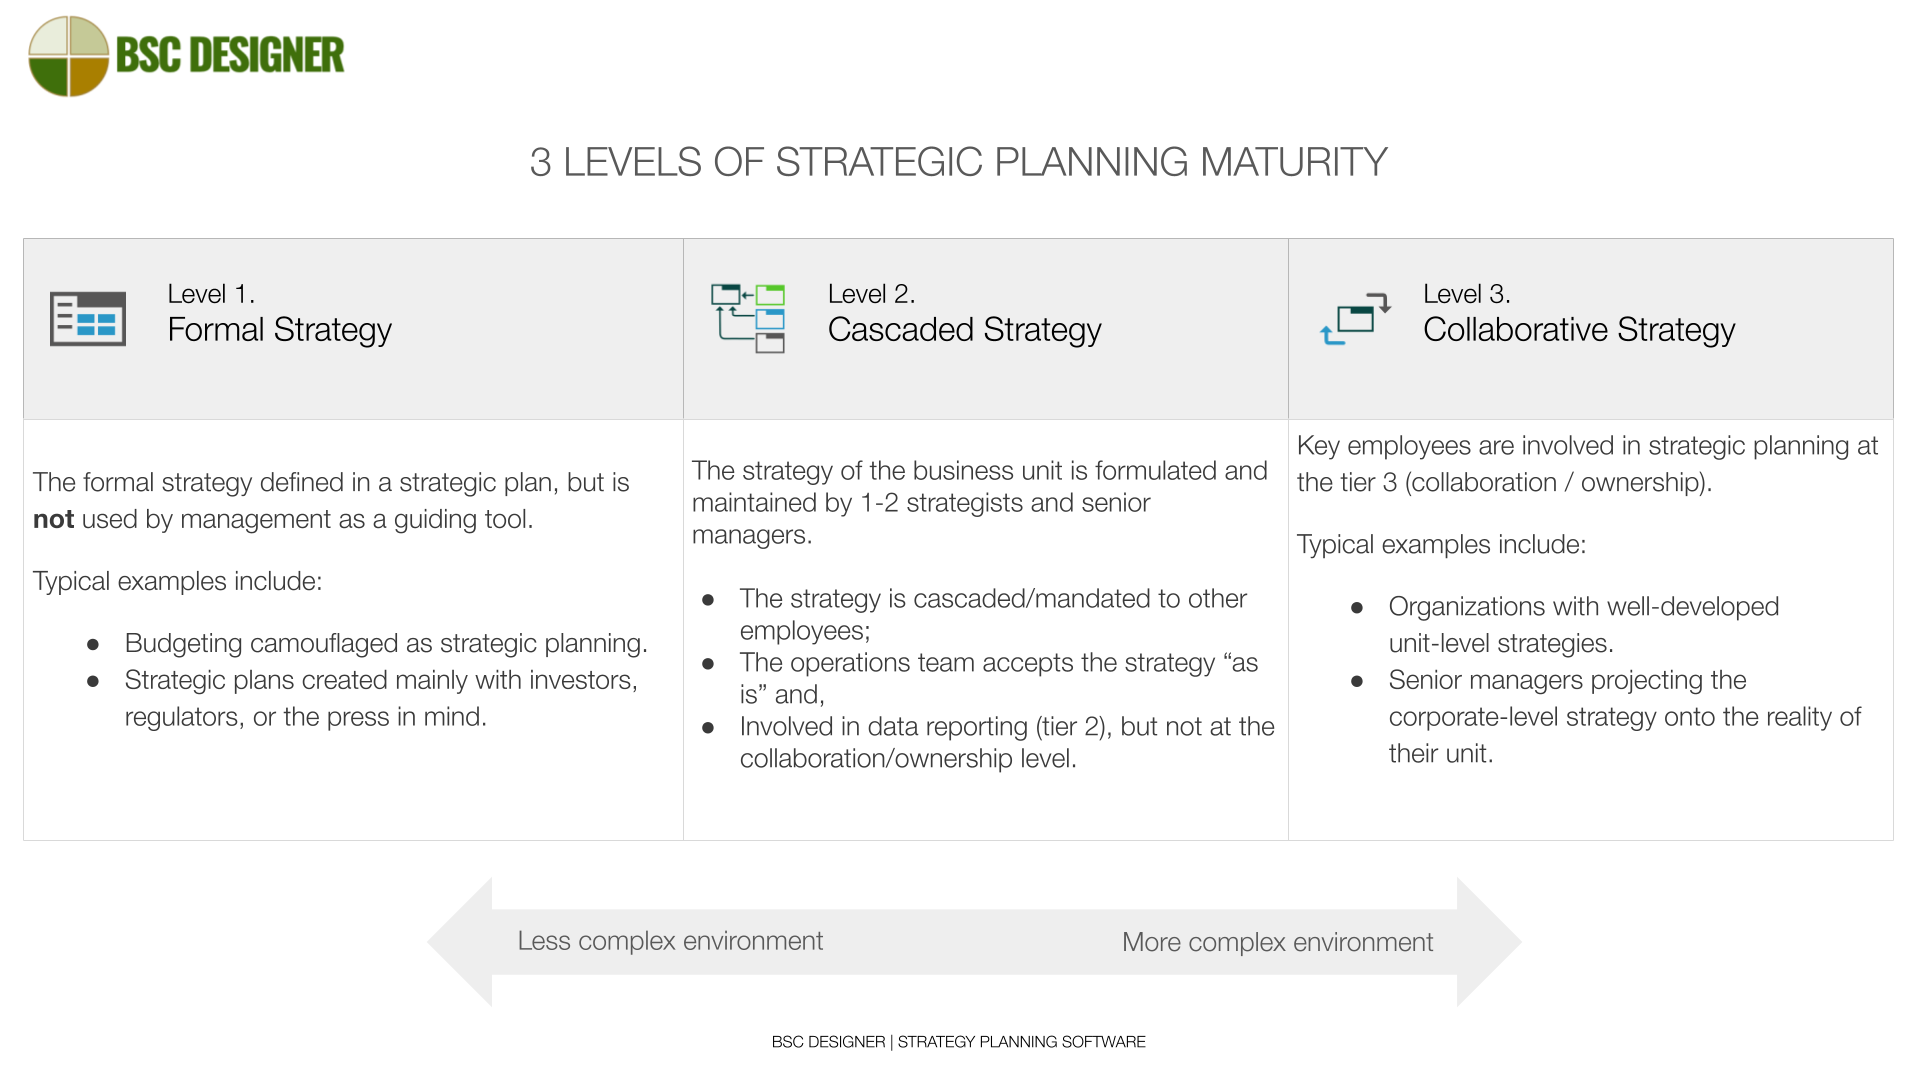 3 levels of strategic planning maturity